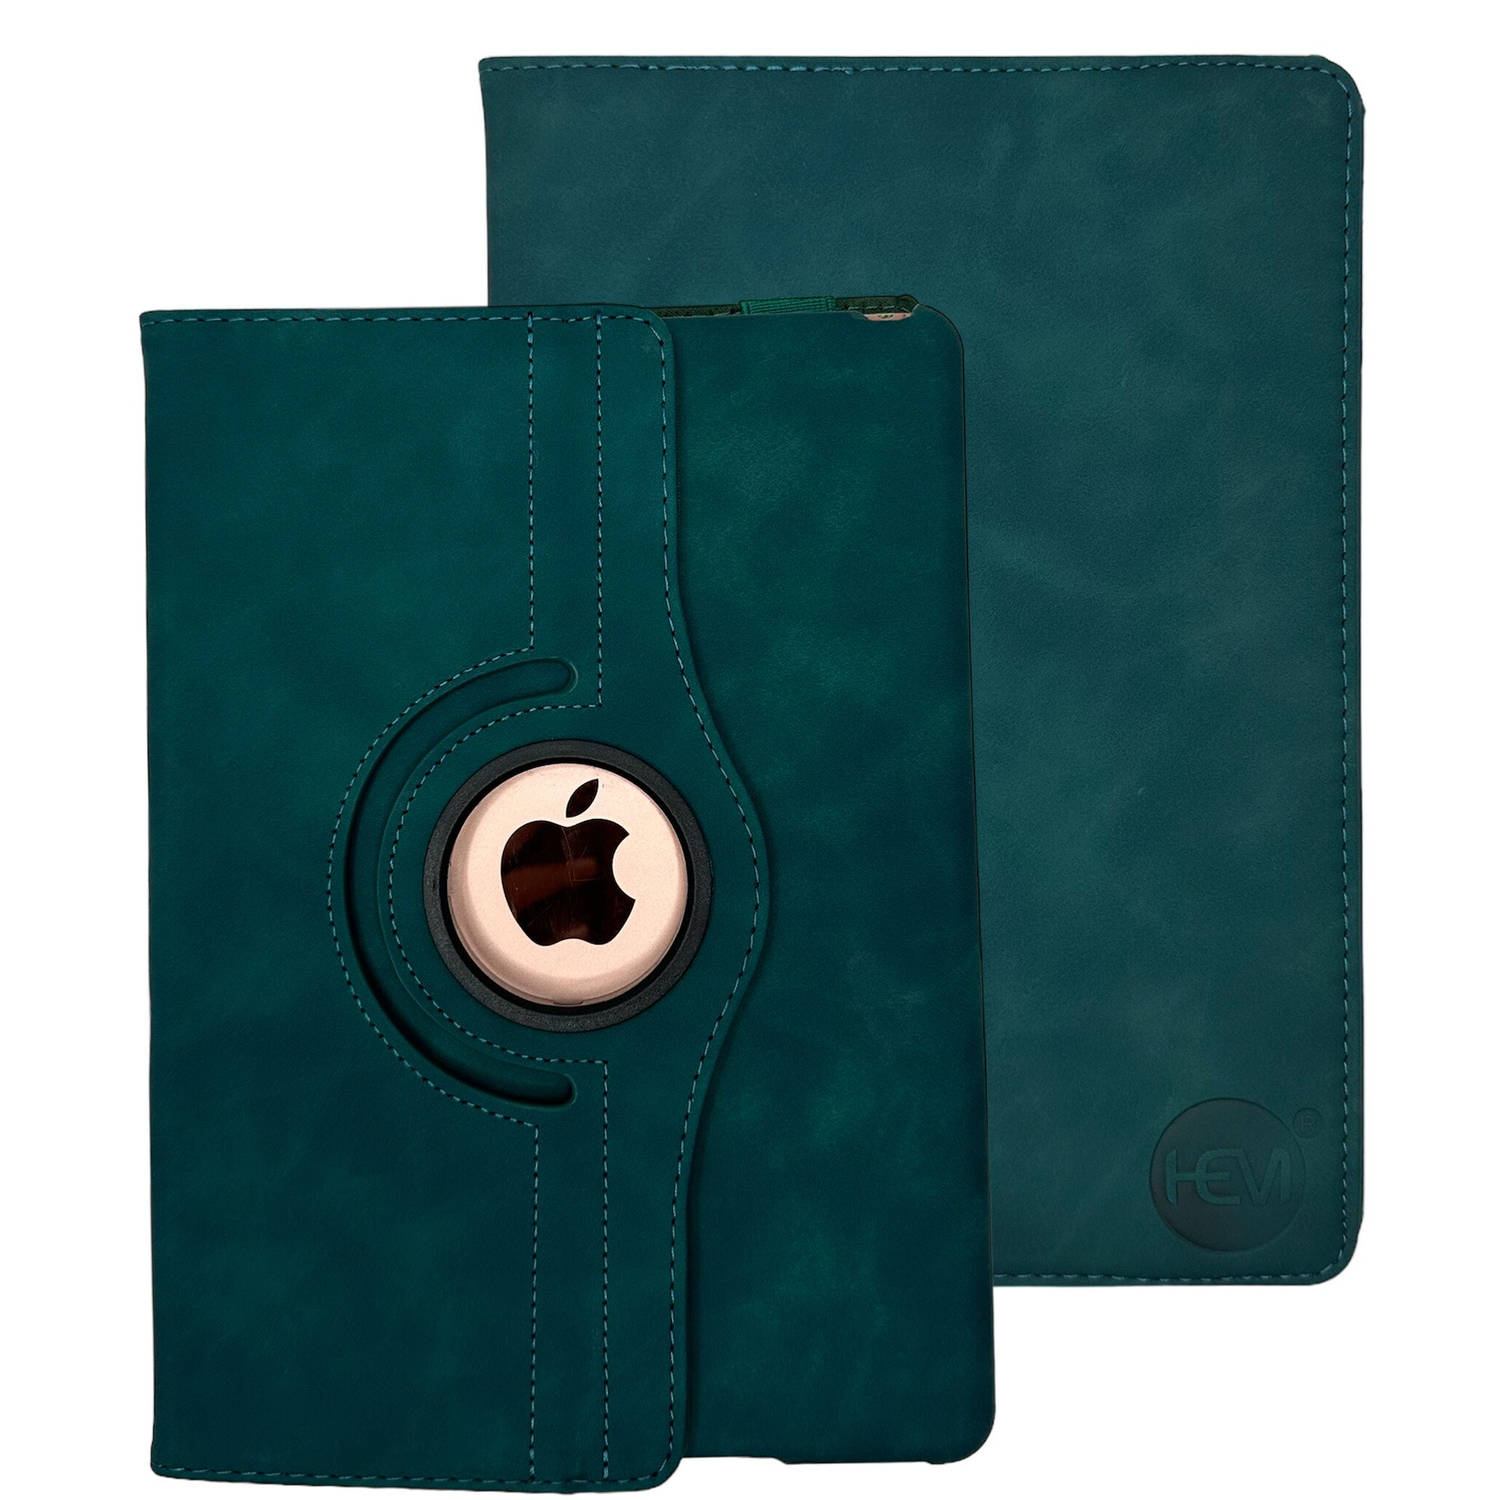 HEM Silky Green iPad hoes geschikt voor iPad 10.2 (2019 / 2020 / 2021) - 10.2 inch Draaibare Autowake Cover - iPad 2019 / 2020 / 2021 hoes - iPad 7 / 8 / 9 Hoes - 7e / 8e / 9e gene